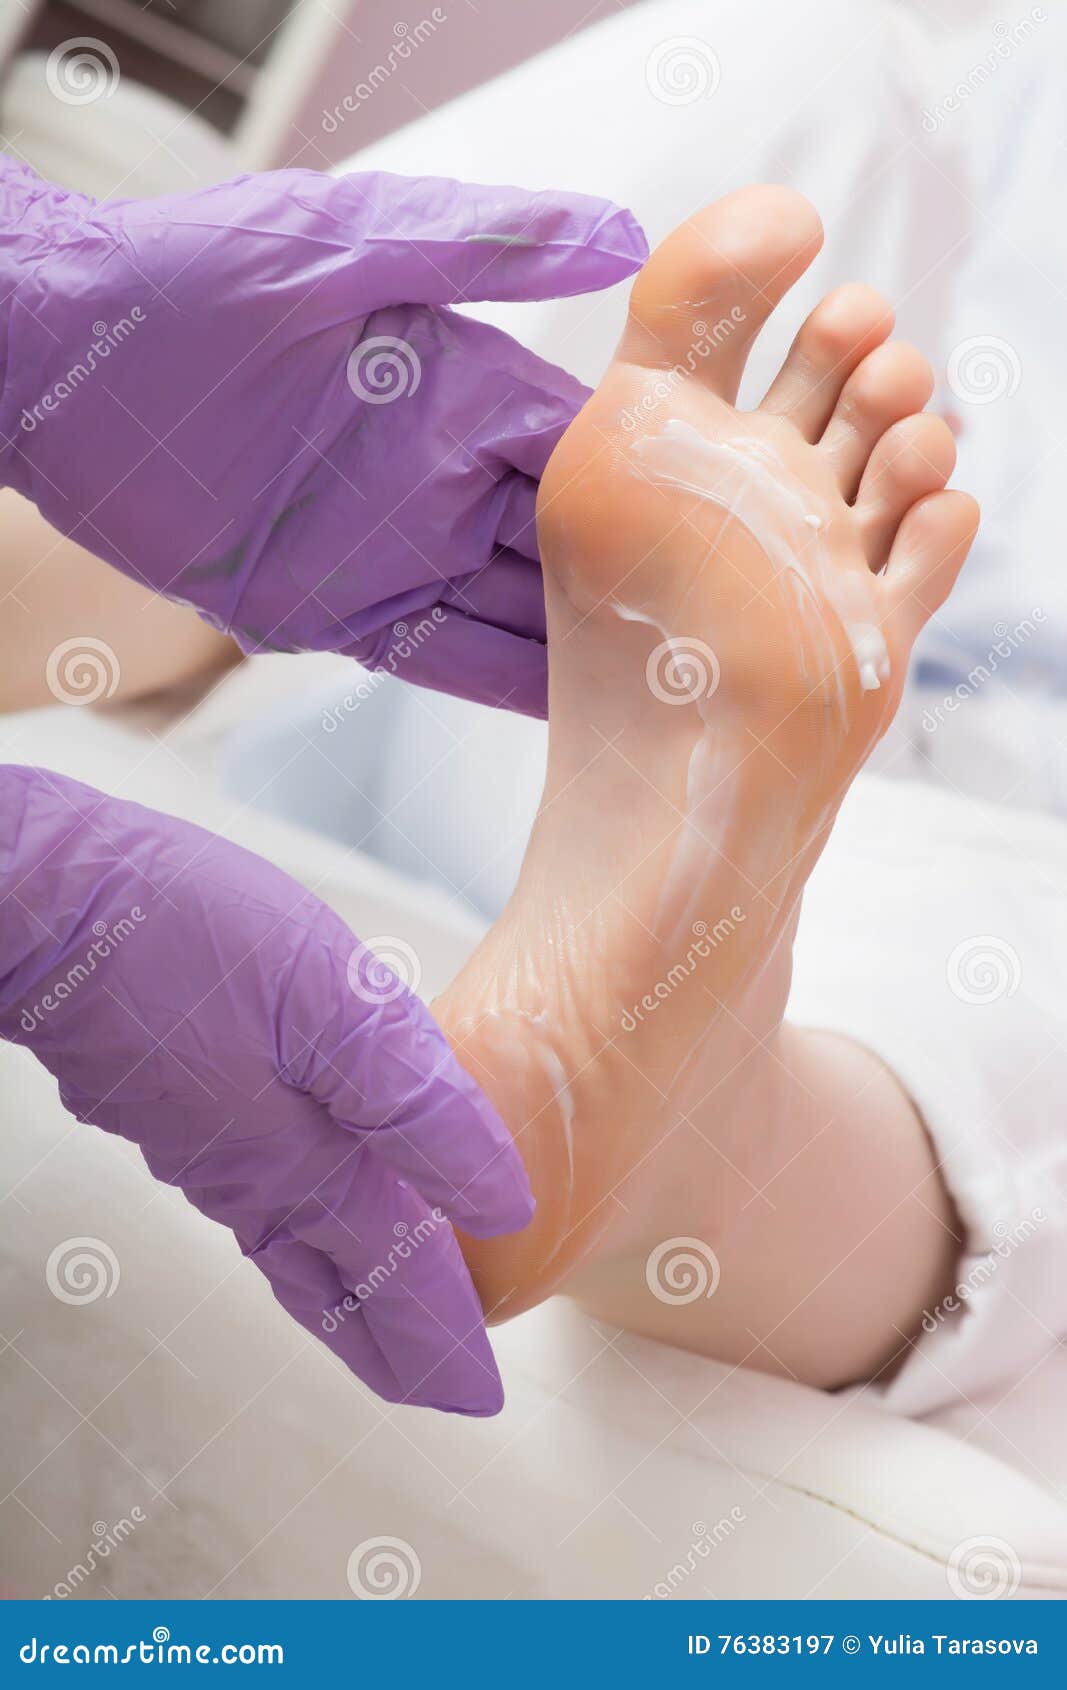 foot care massage with cream. pedicure spa procedure.